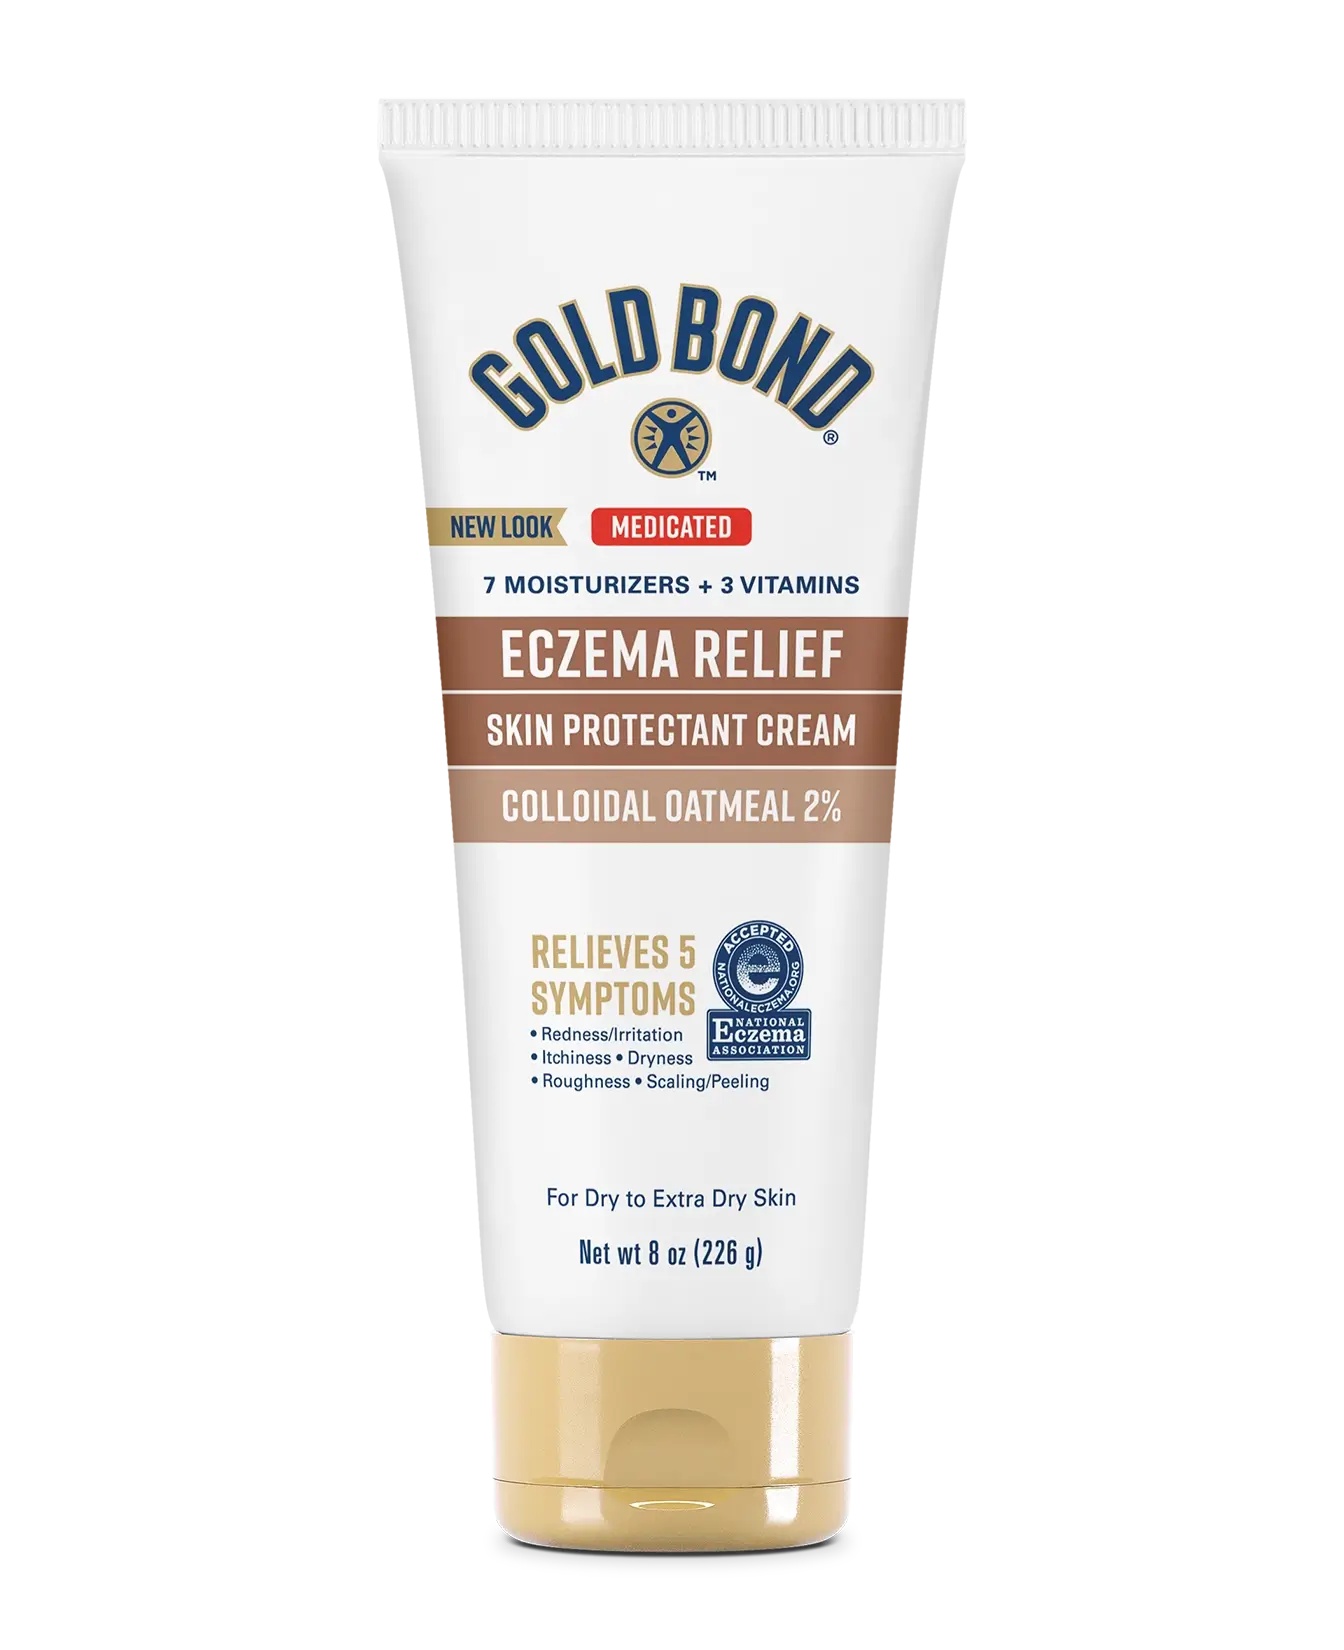 Cream for Eczema Relief by Gold Bond, relieves 5 symptoms of eczema.